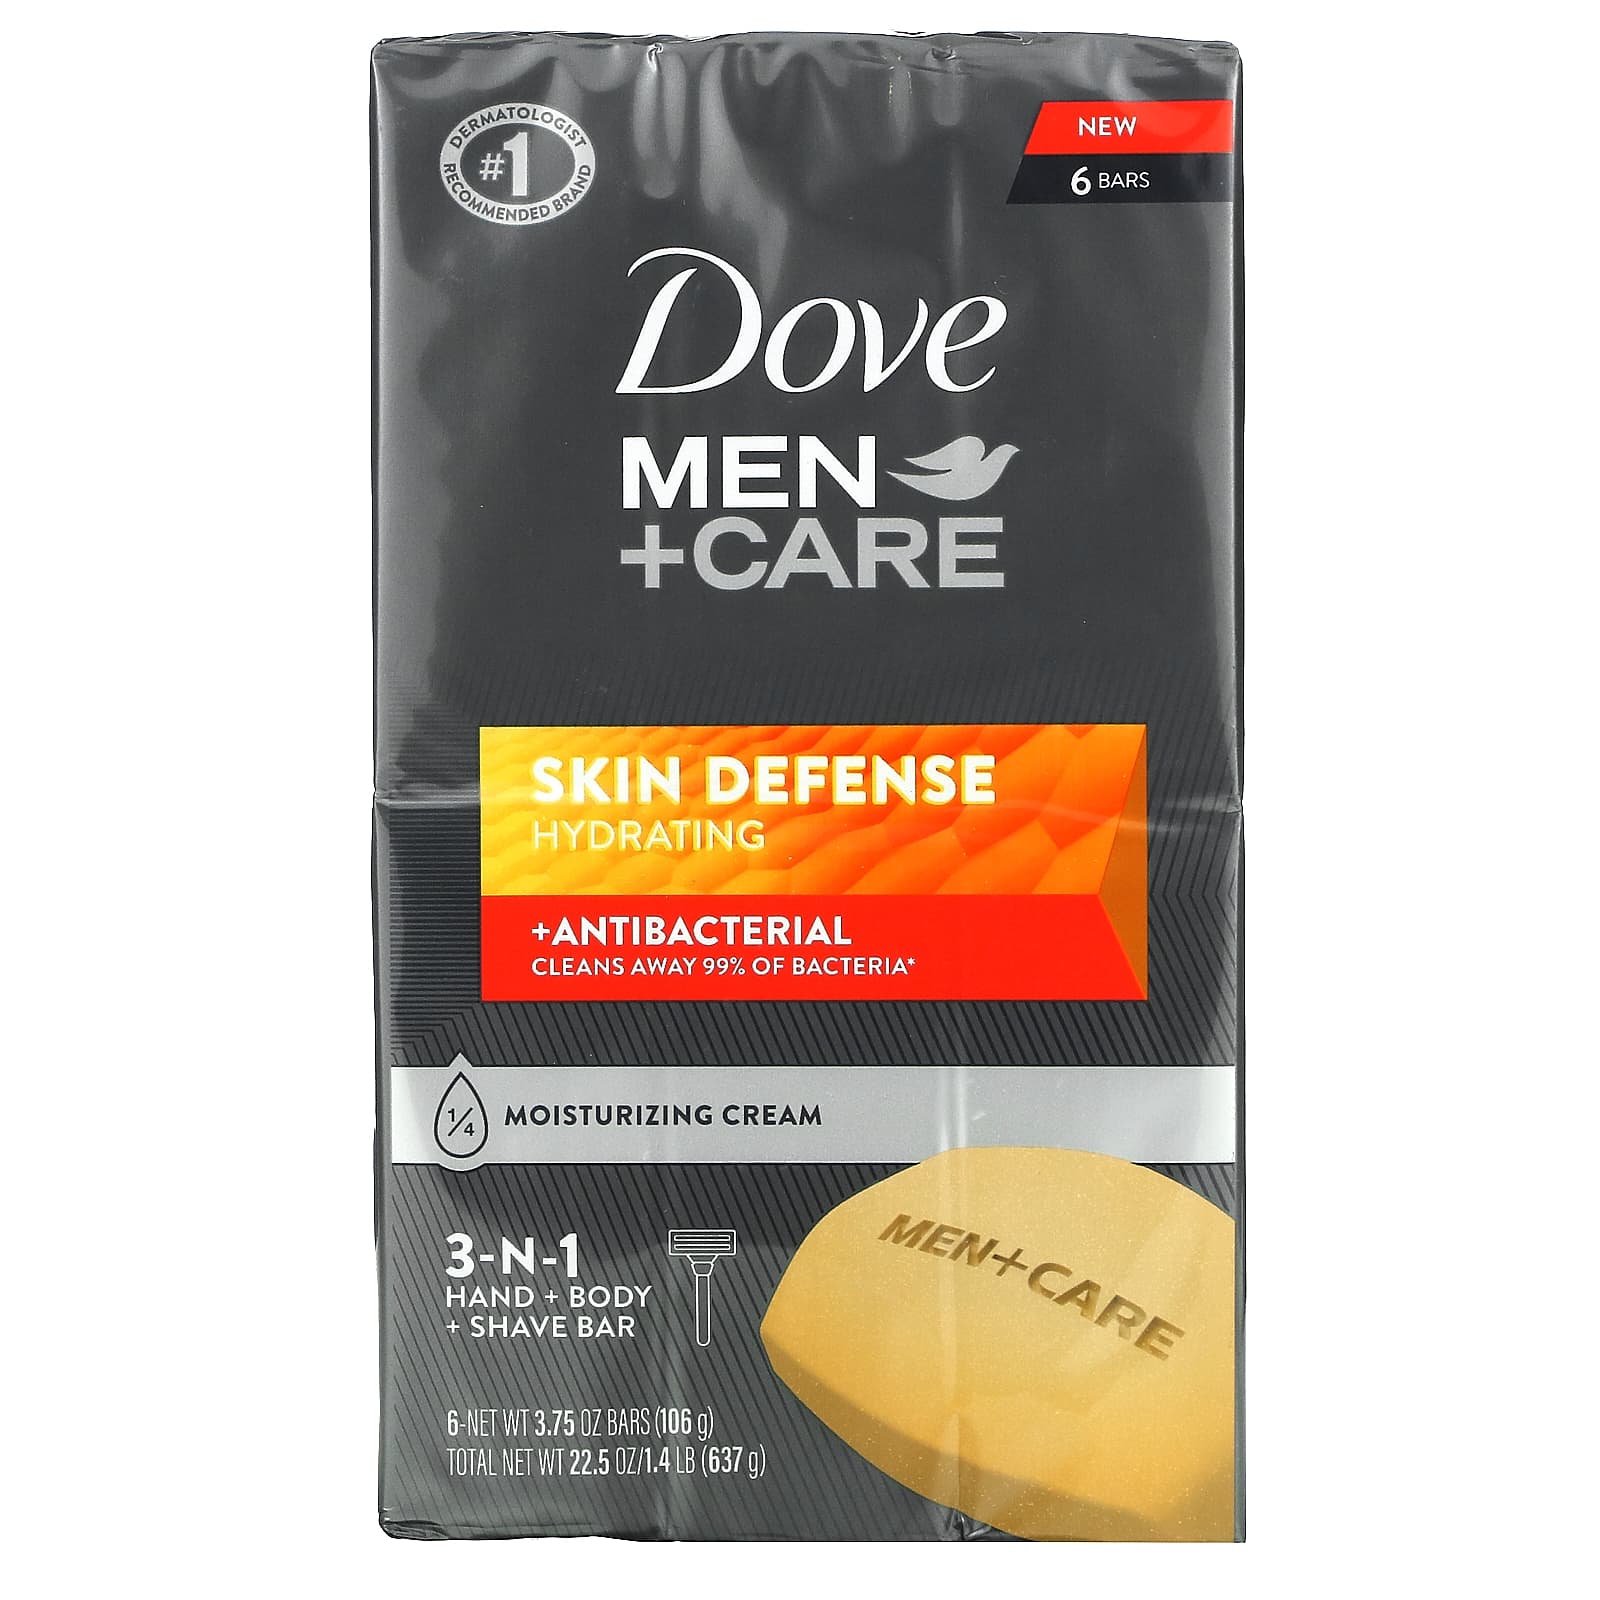 Dove, Men+Care, Skin Defense, 3-In-1 Hand + Body + Shave Bar, 6 Bars (106 g) Each